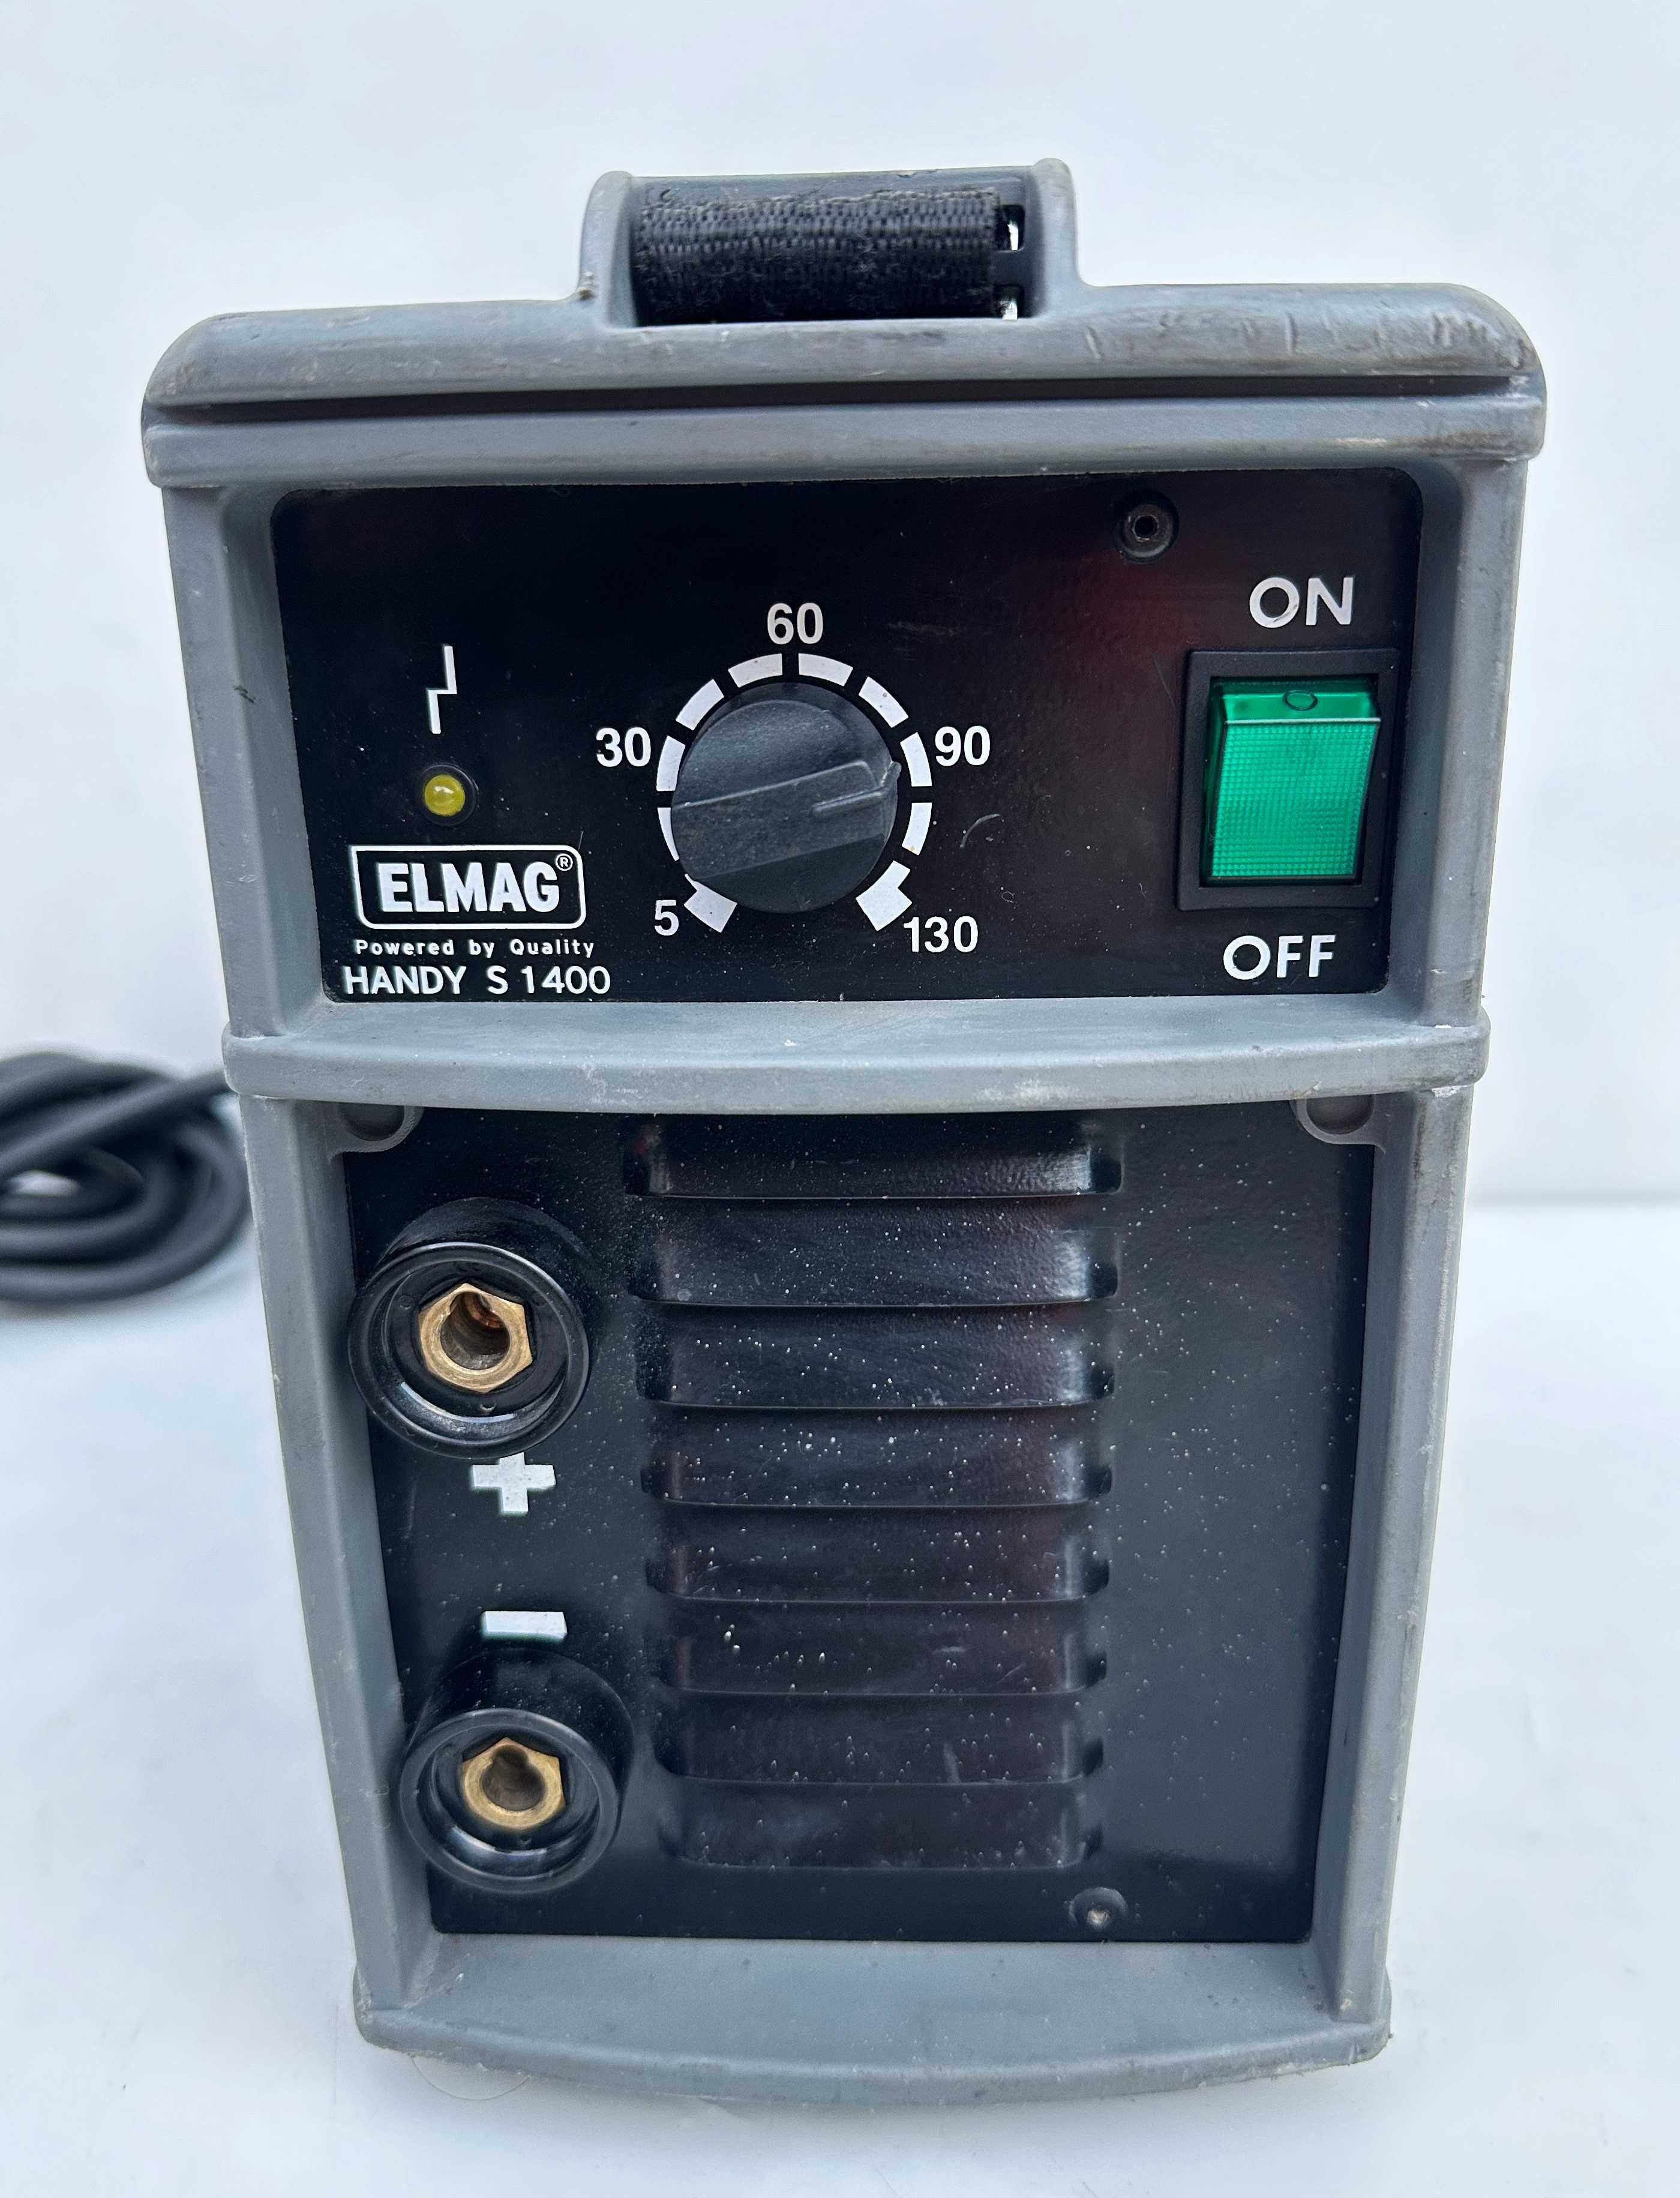 Elmag Handy S1400 - Марков инверторен електрожен